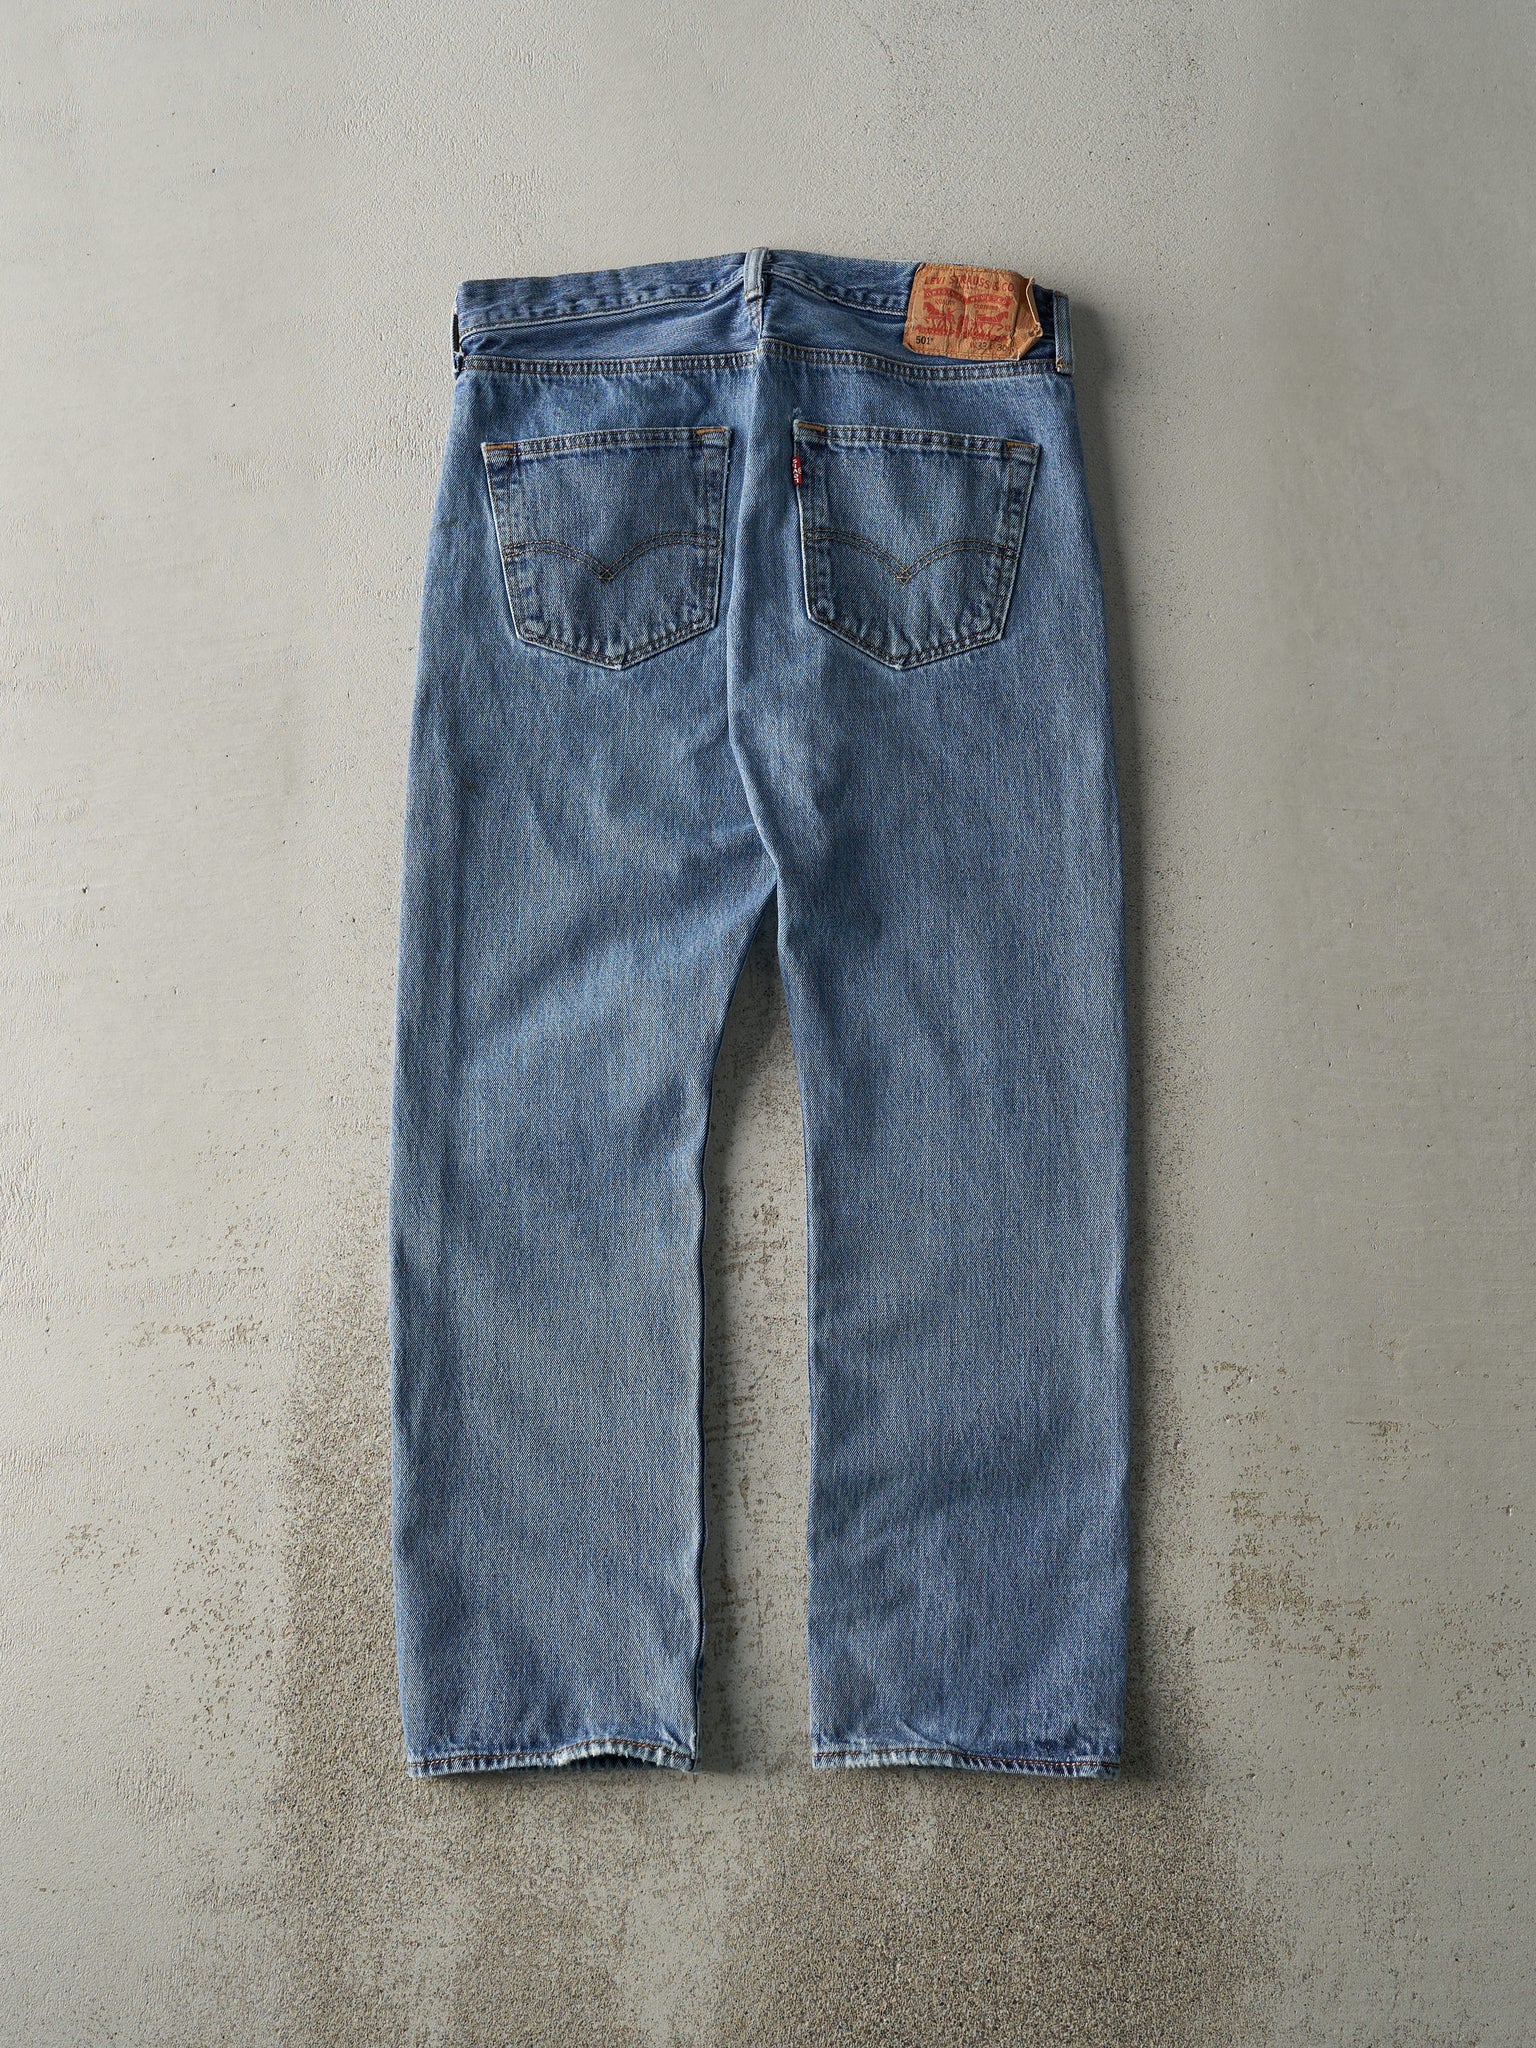 Vintage Y2K Light Wash Levi's 501 Jeans (33x28.5)